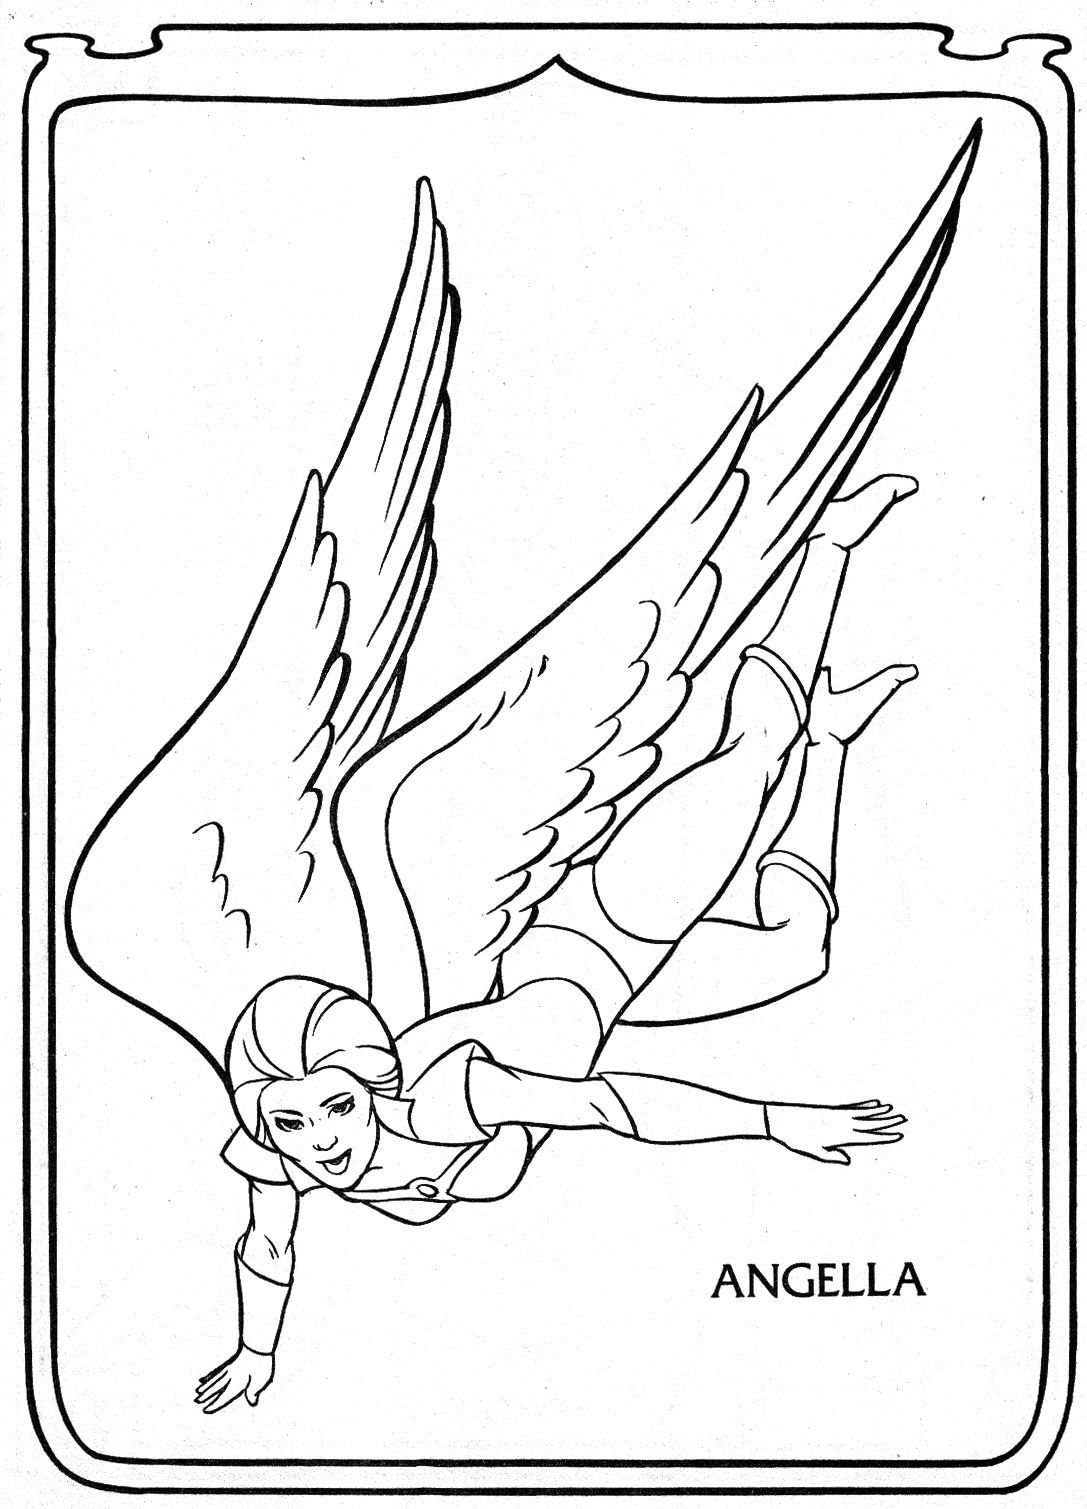 She-Ra: Princess of Power (1985) - coloring book 18